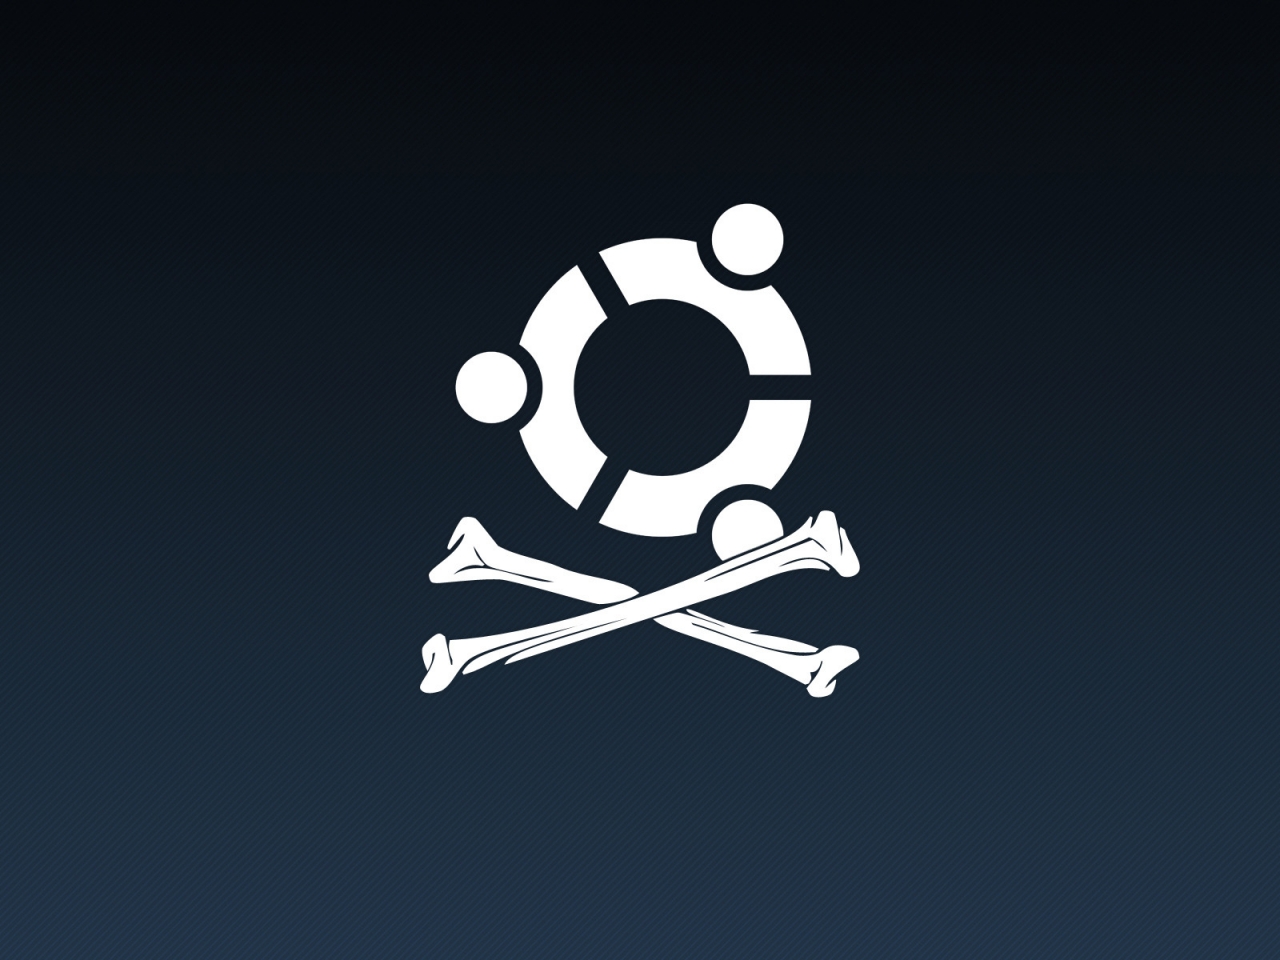 Pirate Ubuntu for 1280 x 960 resolution